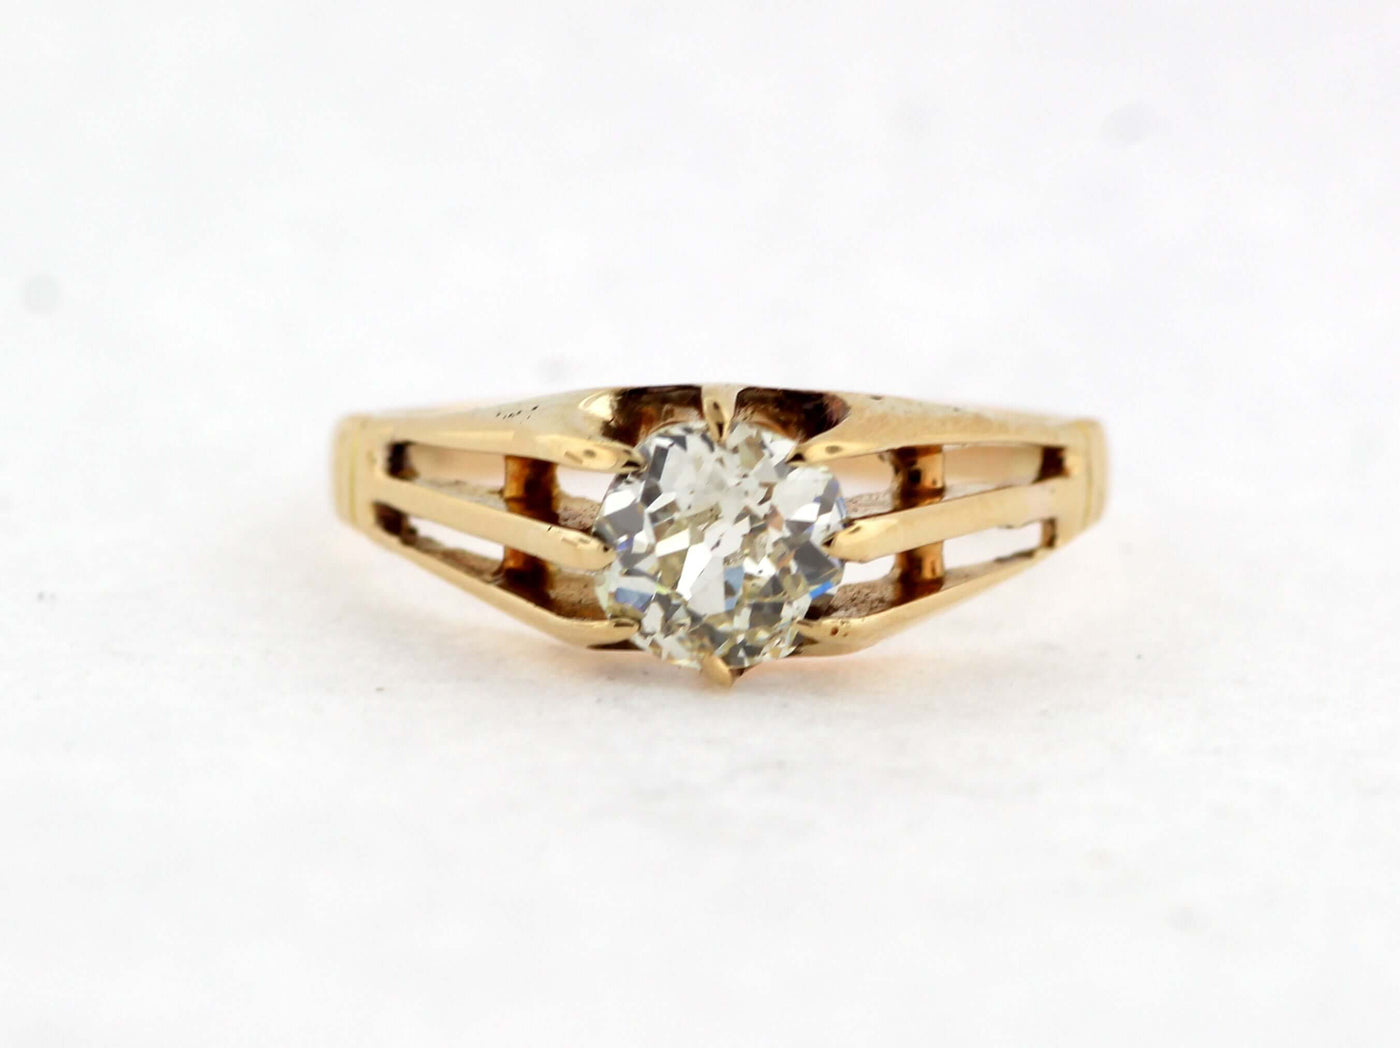 14KY .85 CT OLD MINE CUT DIAMOND RING J-SI1 N1393
estate ring has por